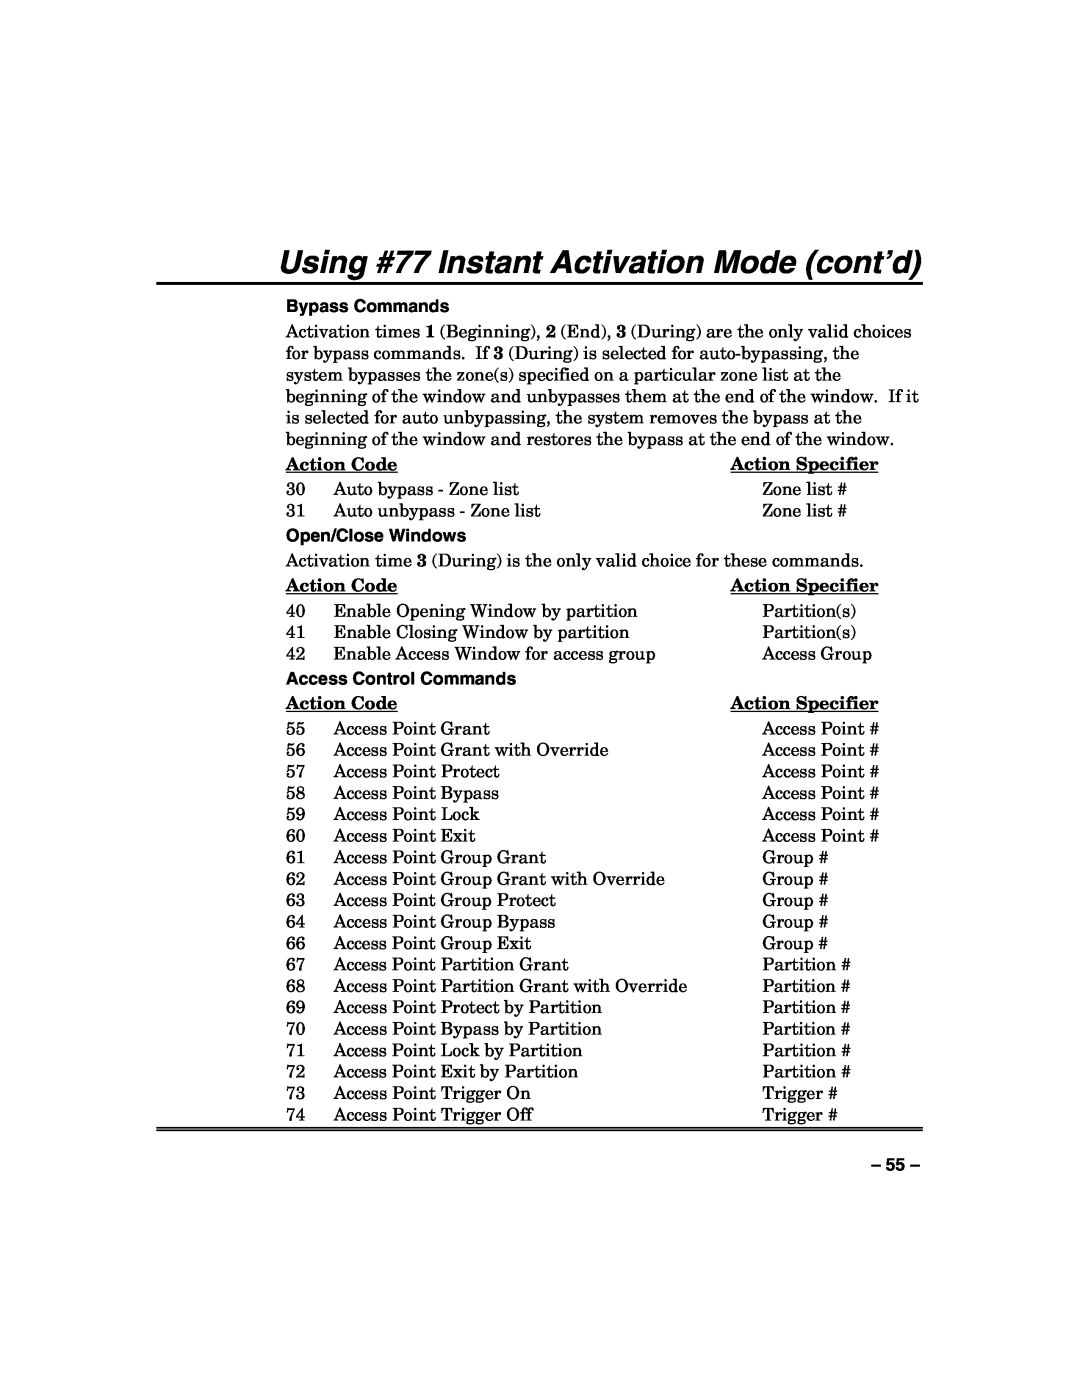 Honeywell VISTA128BPT, VISTA250BPT, 128BPTSIA manual Using #77 Instant Activation Mode cont’d, Action Code, Action Specifier 